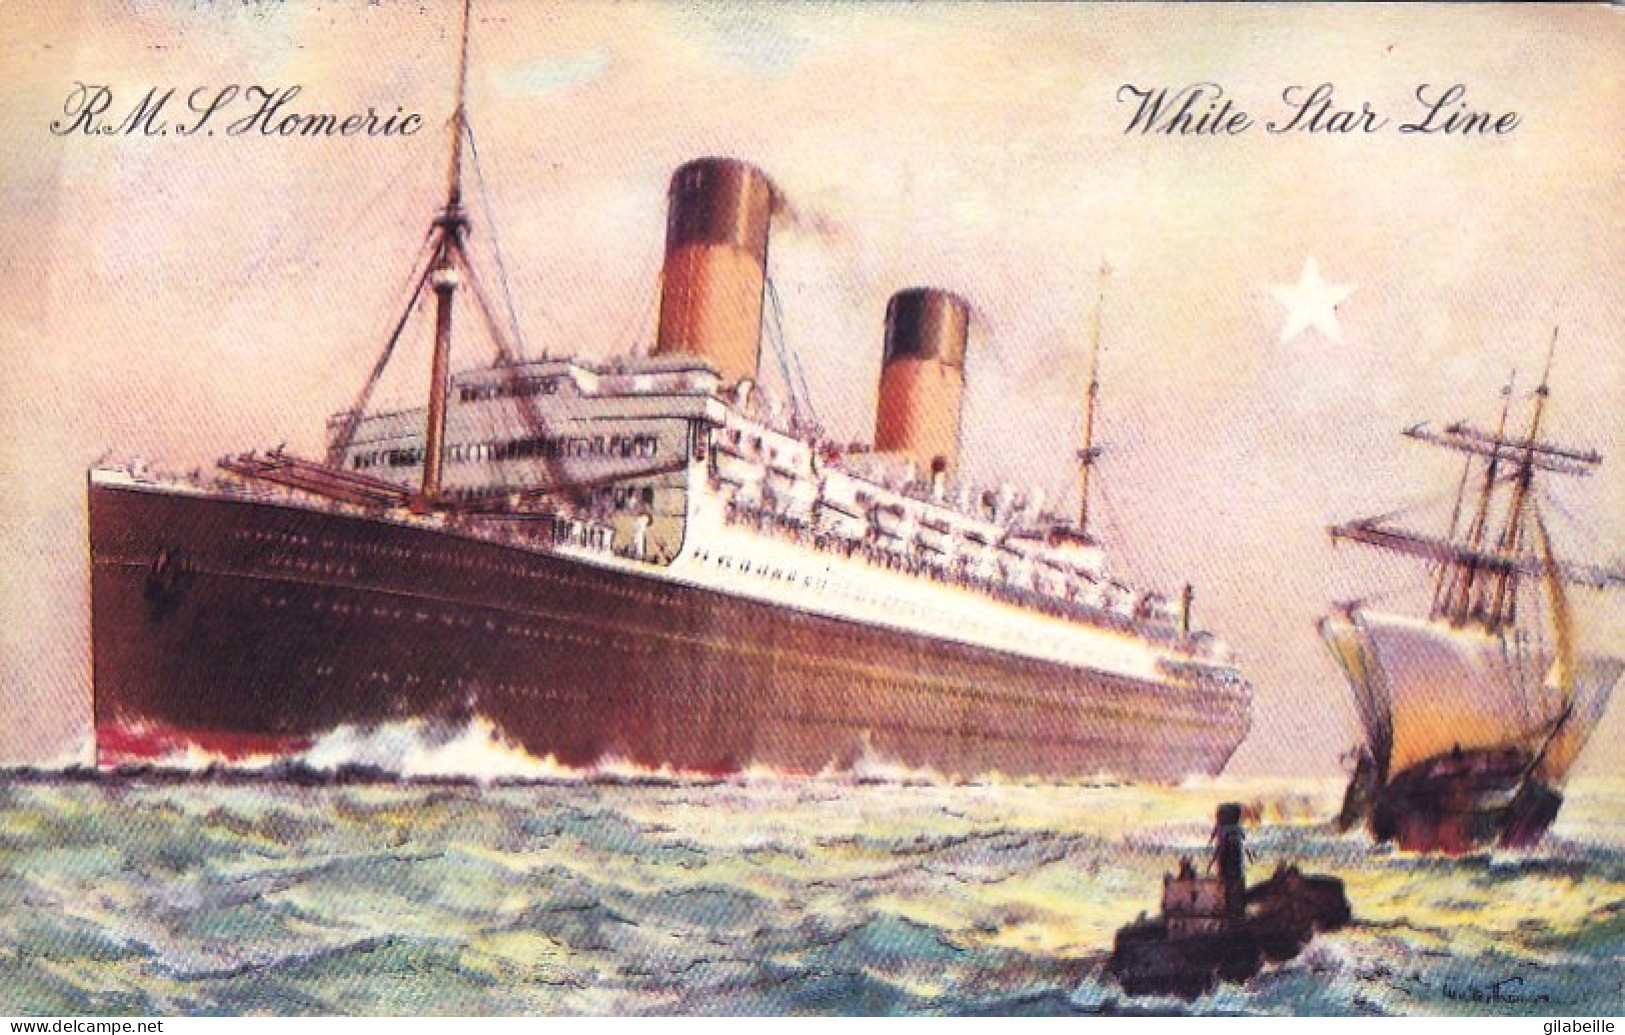 Paquebot - R.M.S Homeric - White Star Line - 1903 - Paquebots